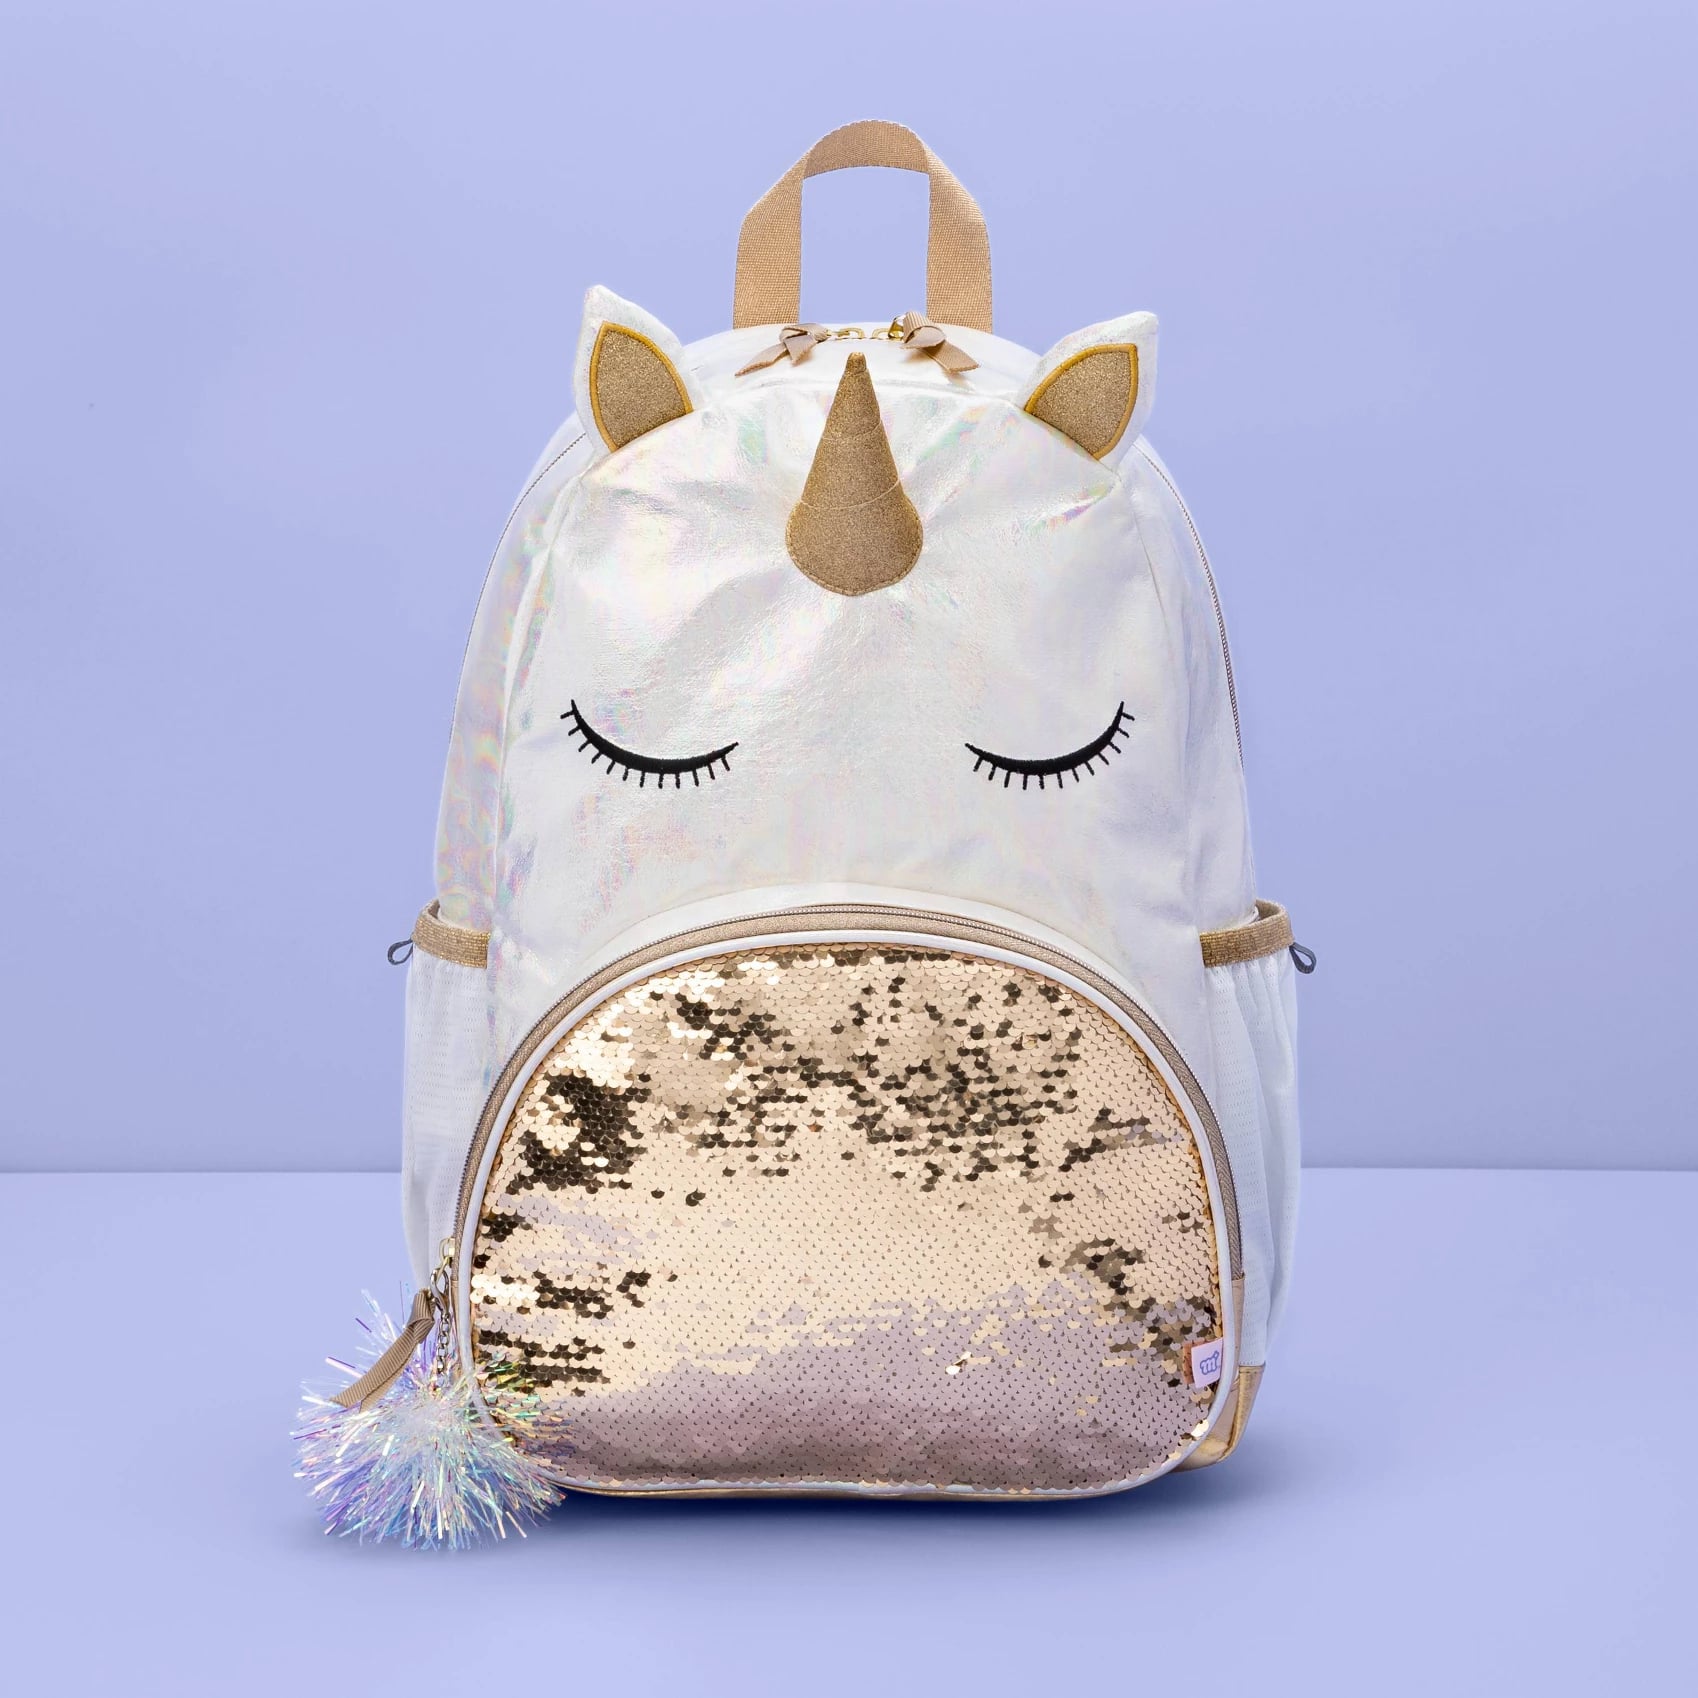 Jolyhui Student Kids Unicorn Pattern Backpack Classic Casual Travel Daypack College Bookbag for Kids 32c1842cm